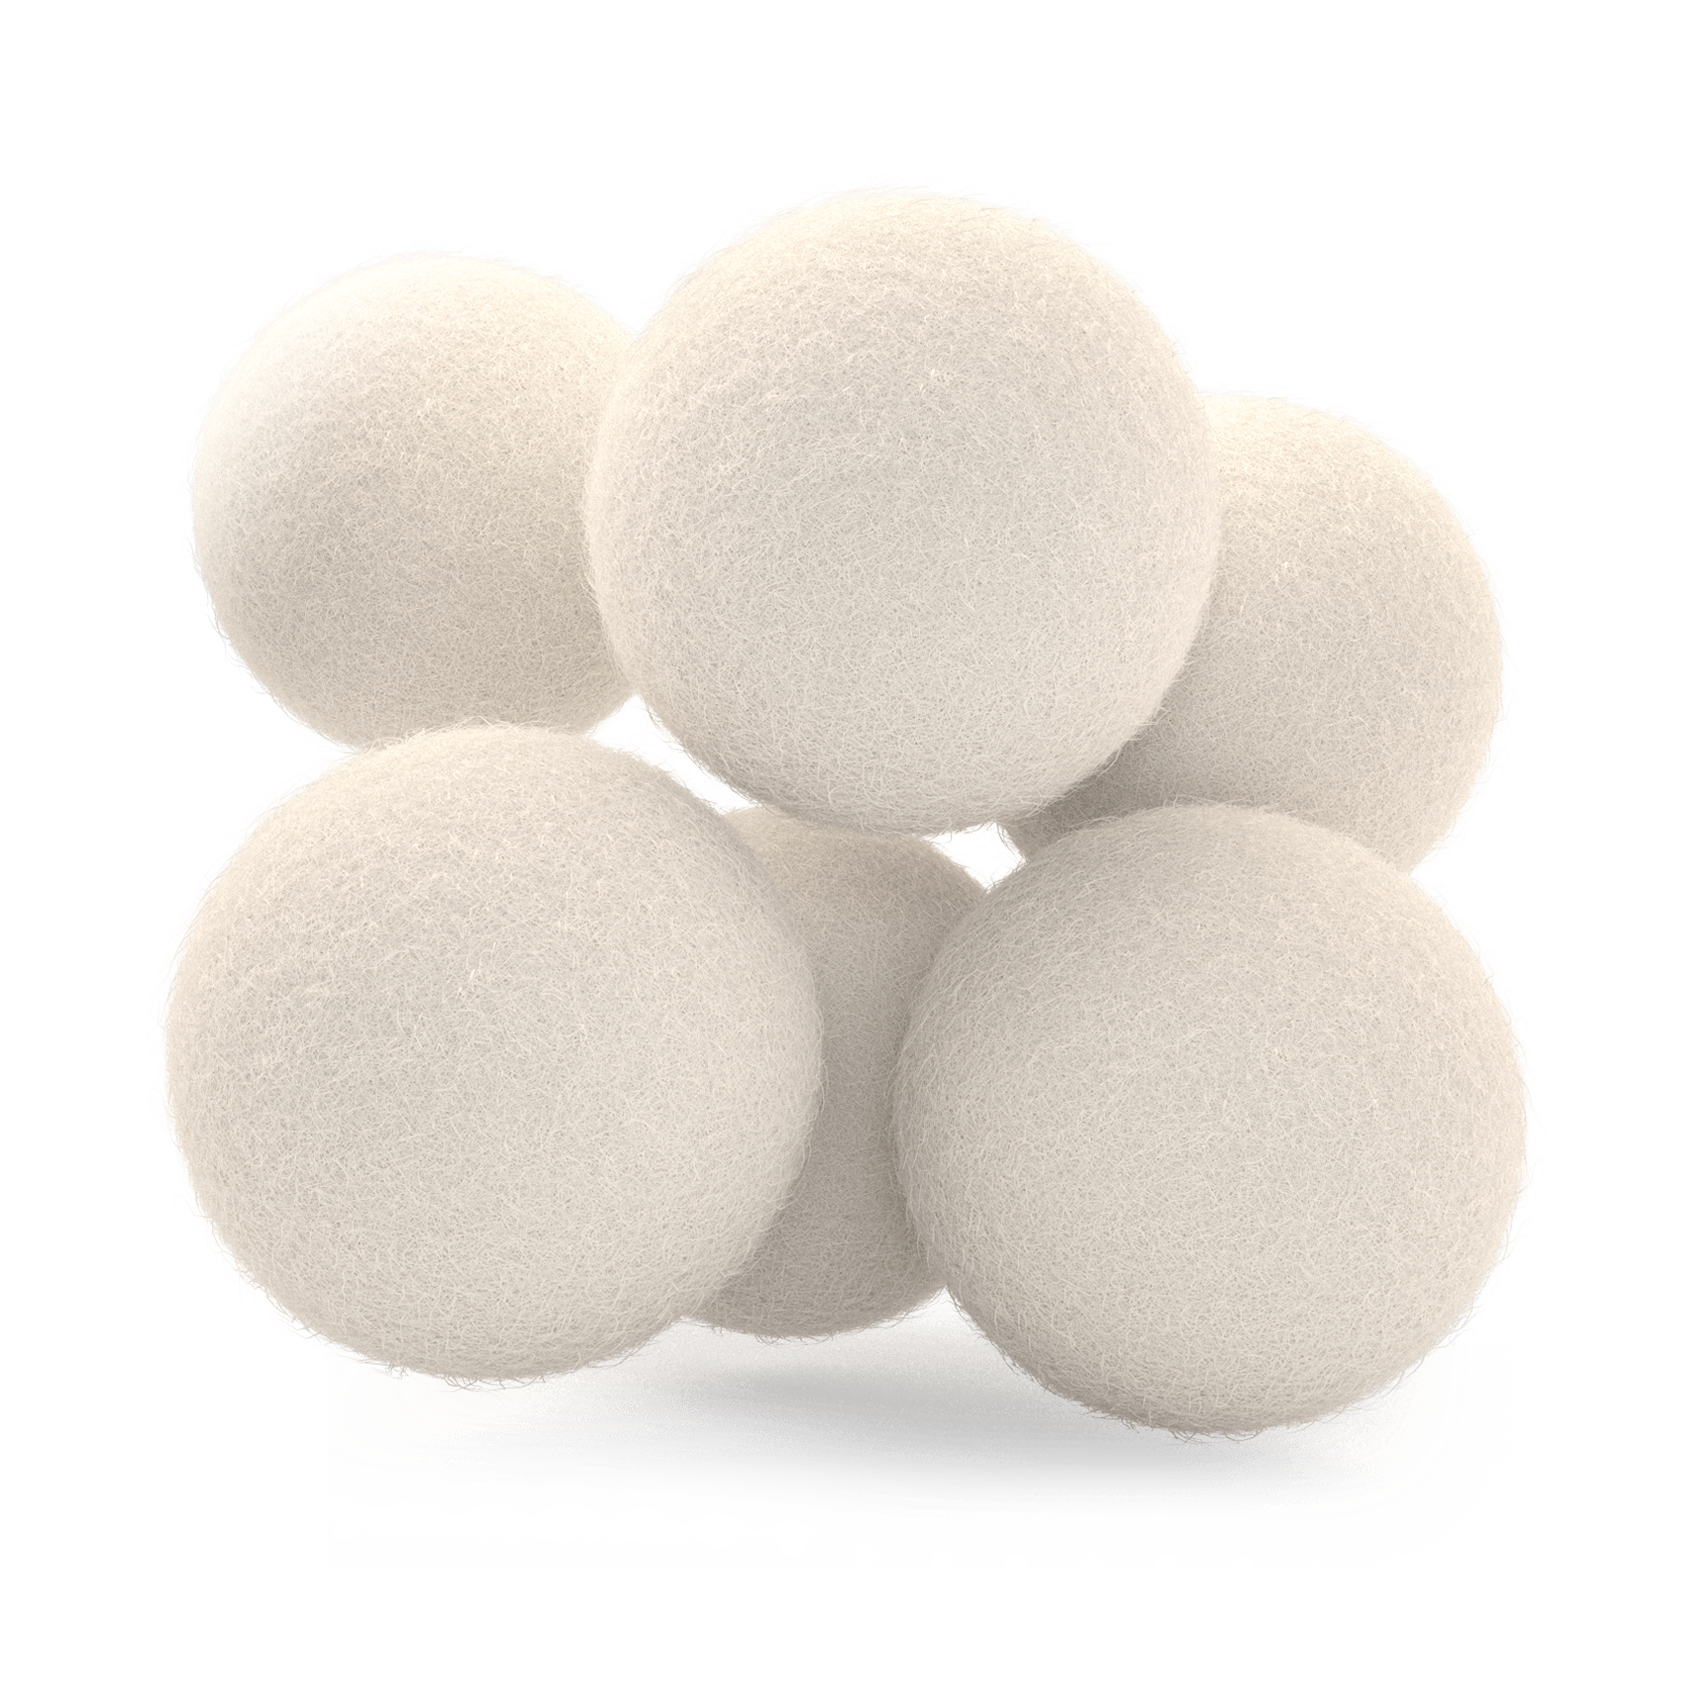  OHOCO Wool Dryer Balls 6 Pack XL, Organic Natural Wool